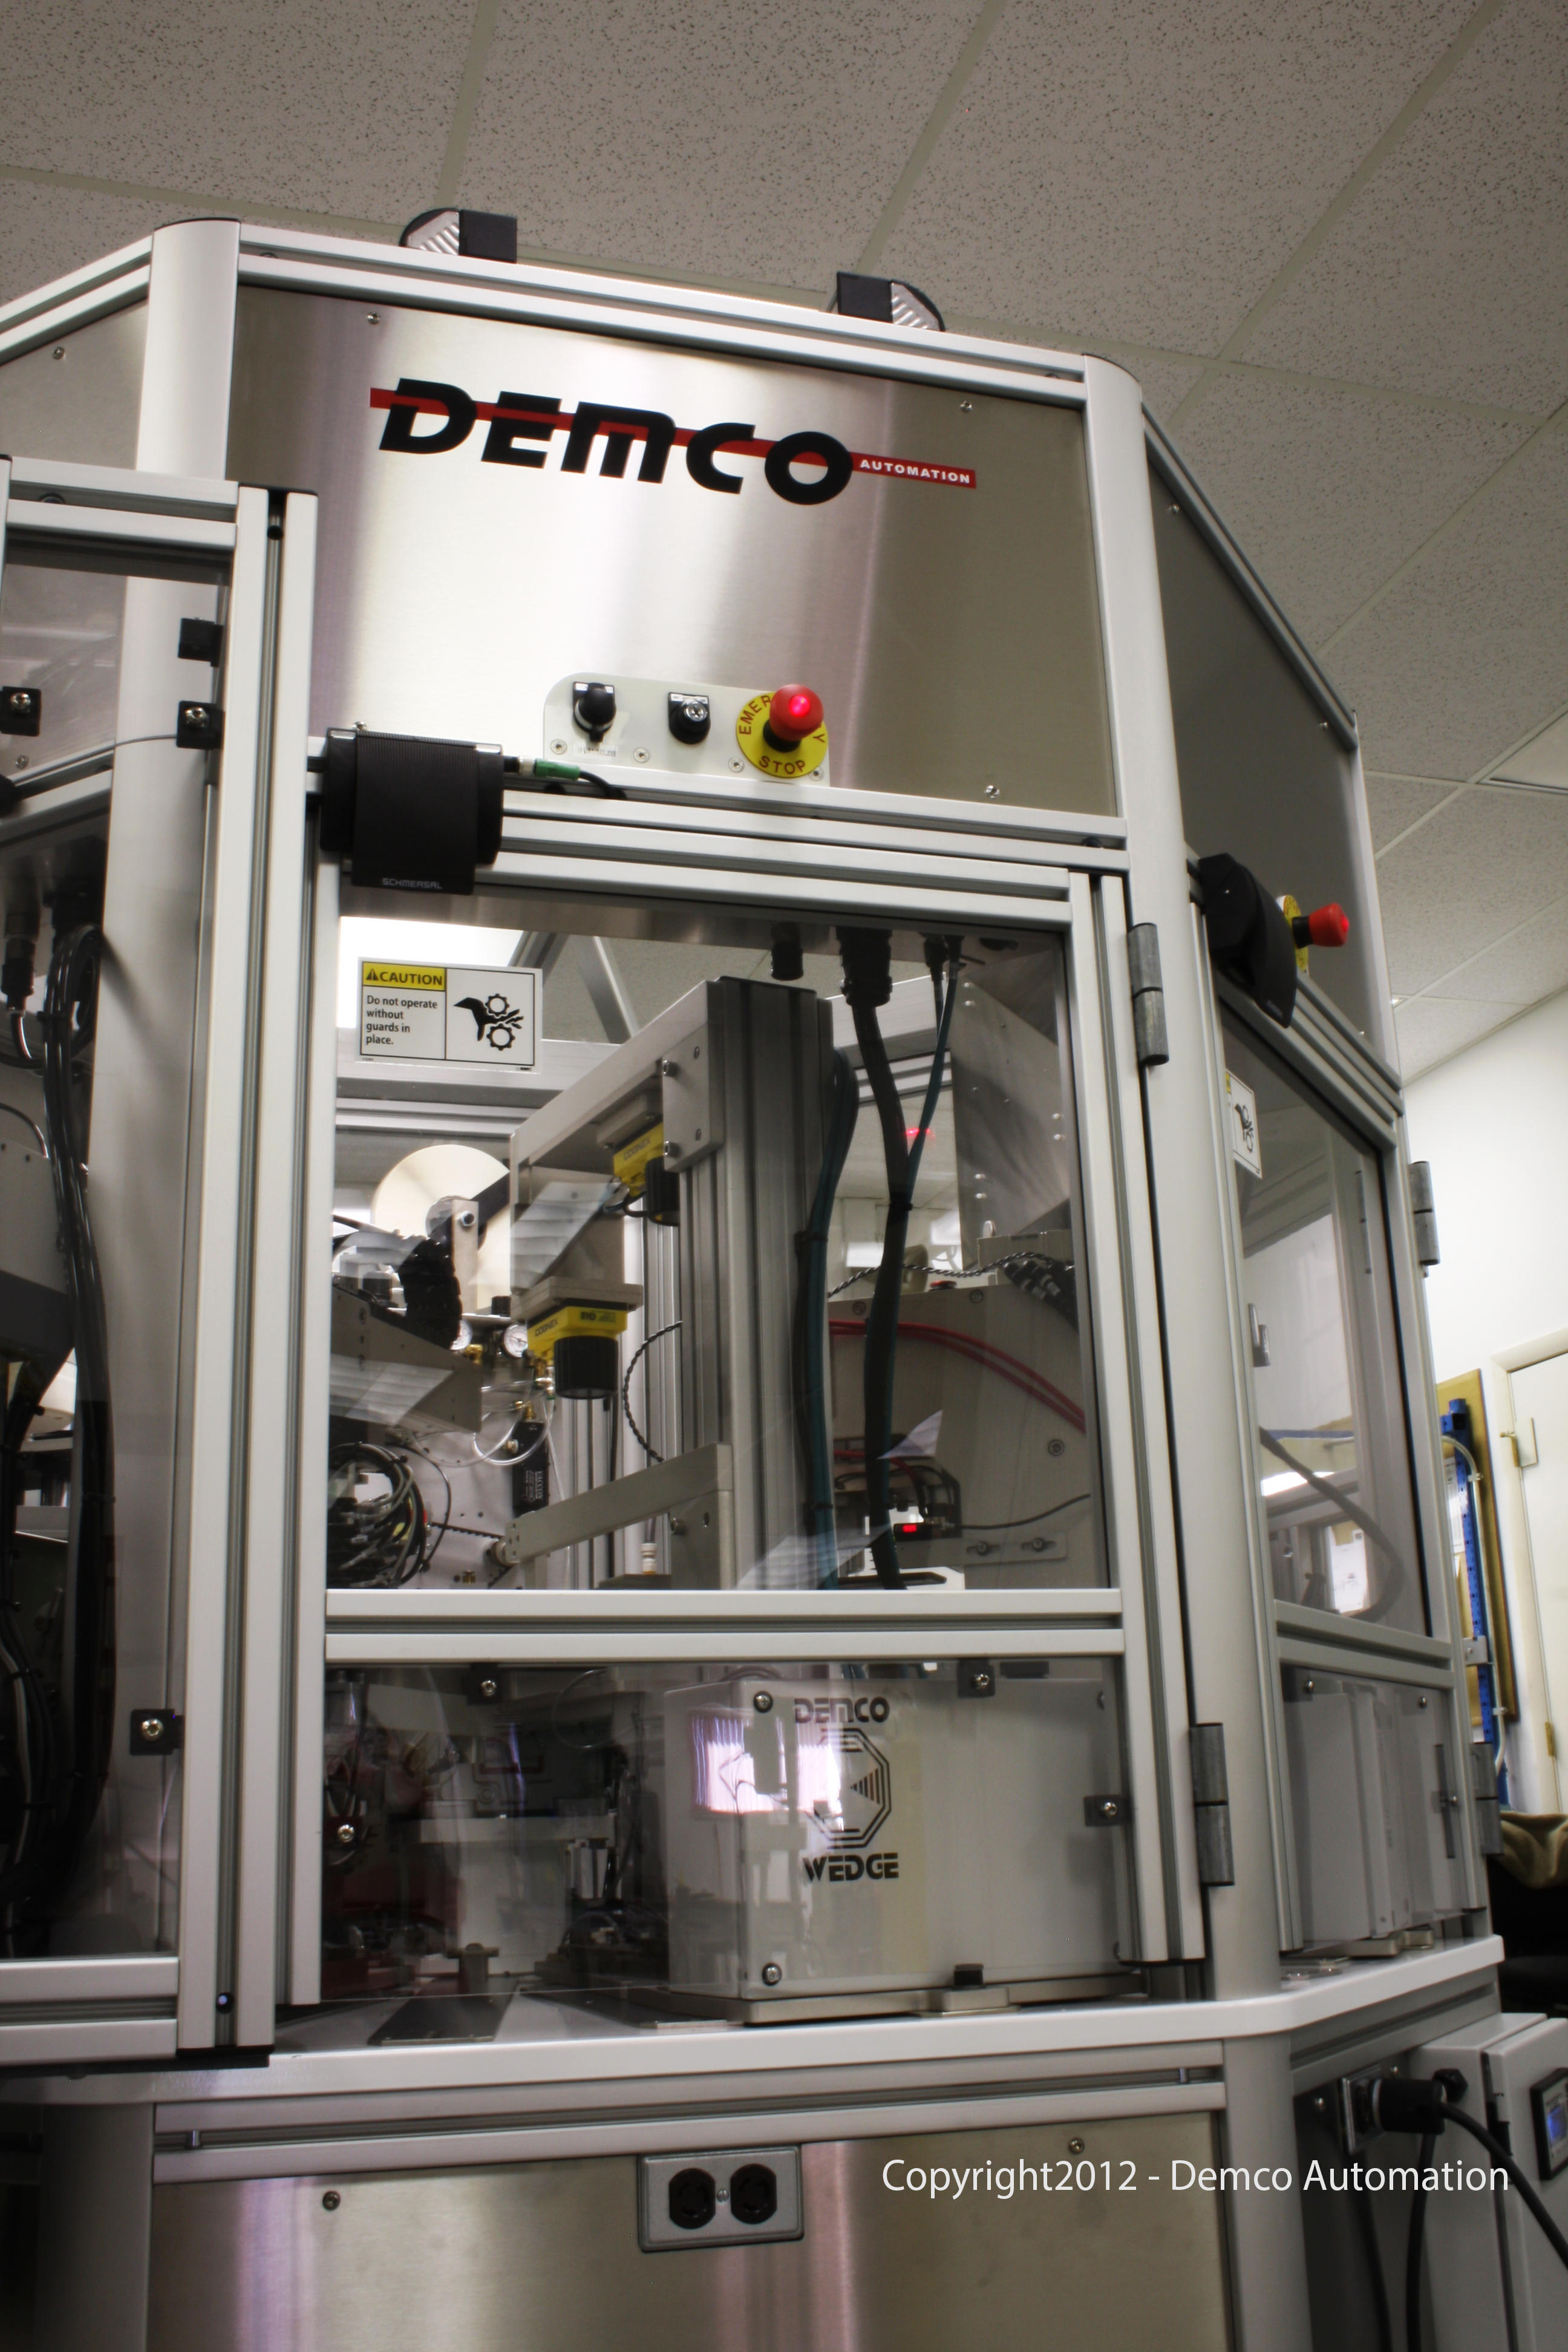 Demco Automation Quakertown (215)538-9700